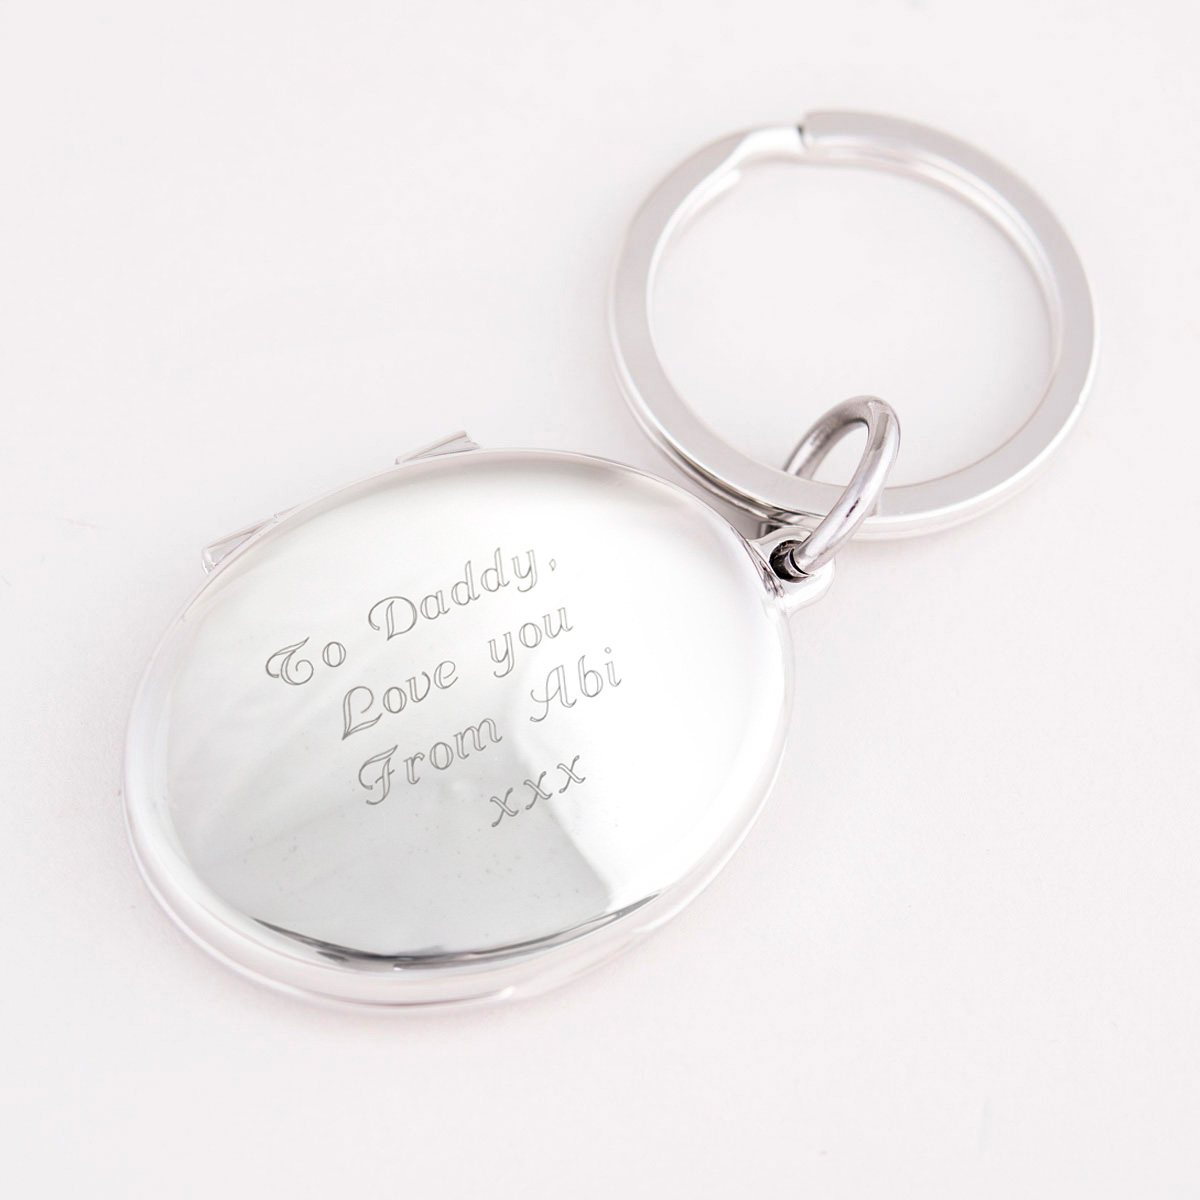 Personalised Engraved Photo Key Ring